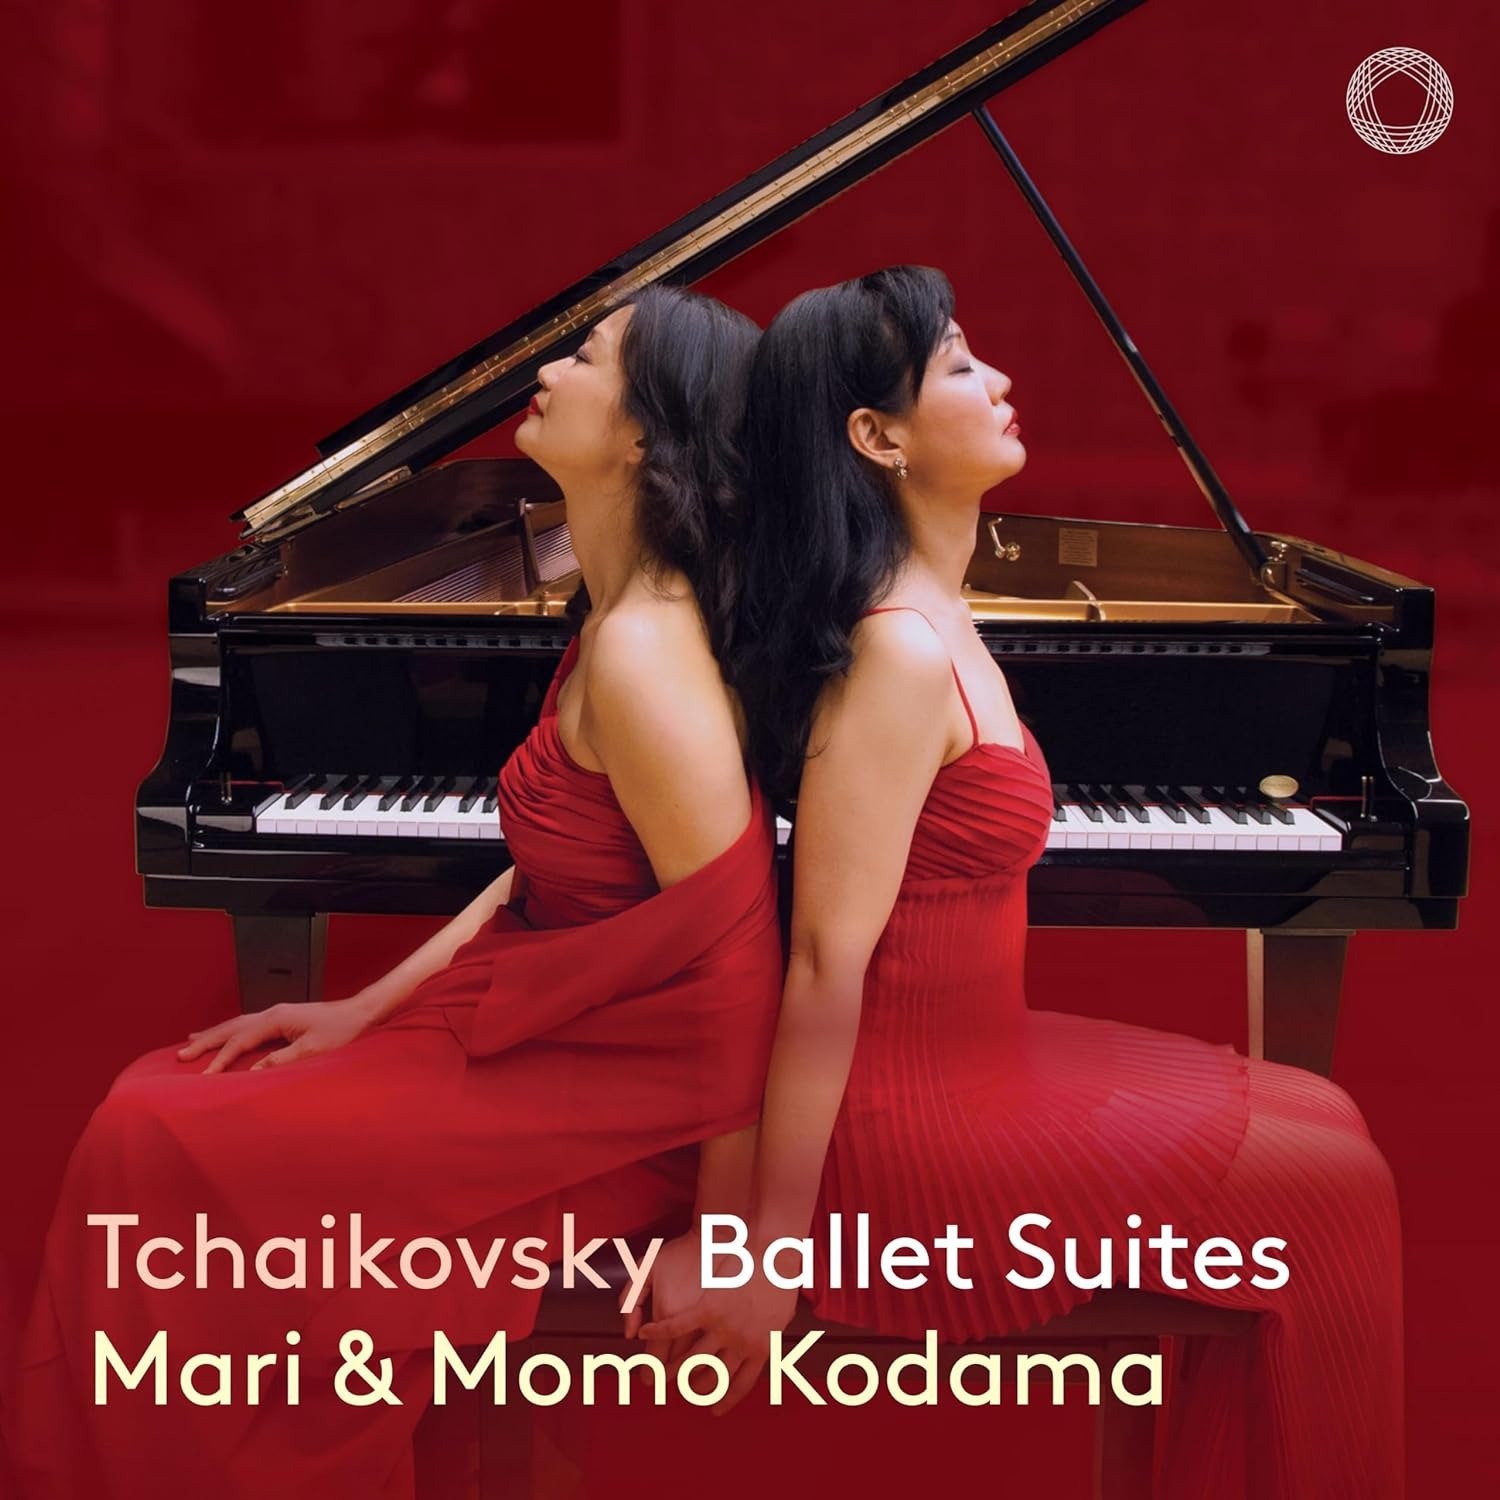 CD Shop - KODAMA, MARI & MOMO TCHAIKOVSKY BALLET SUITES